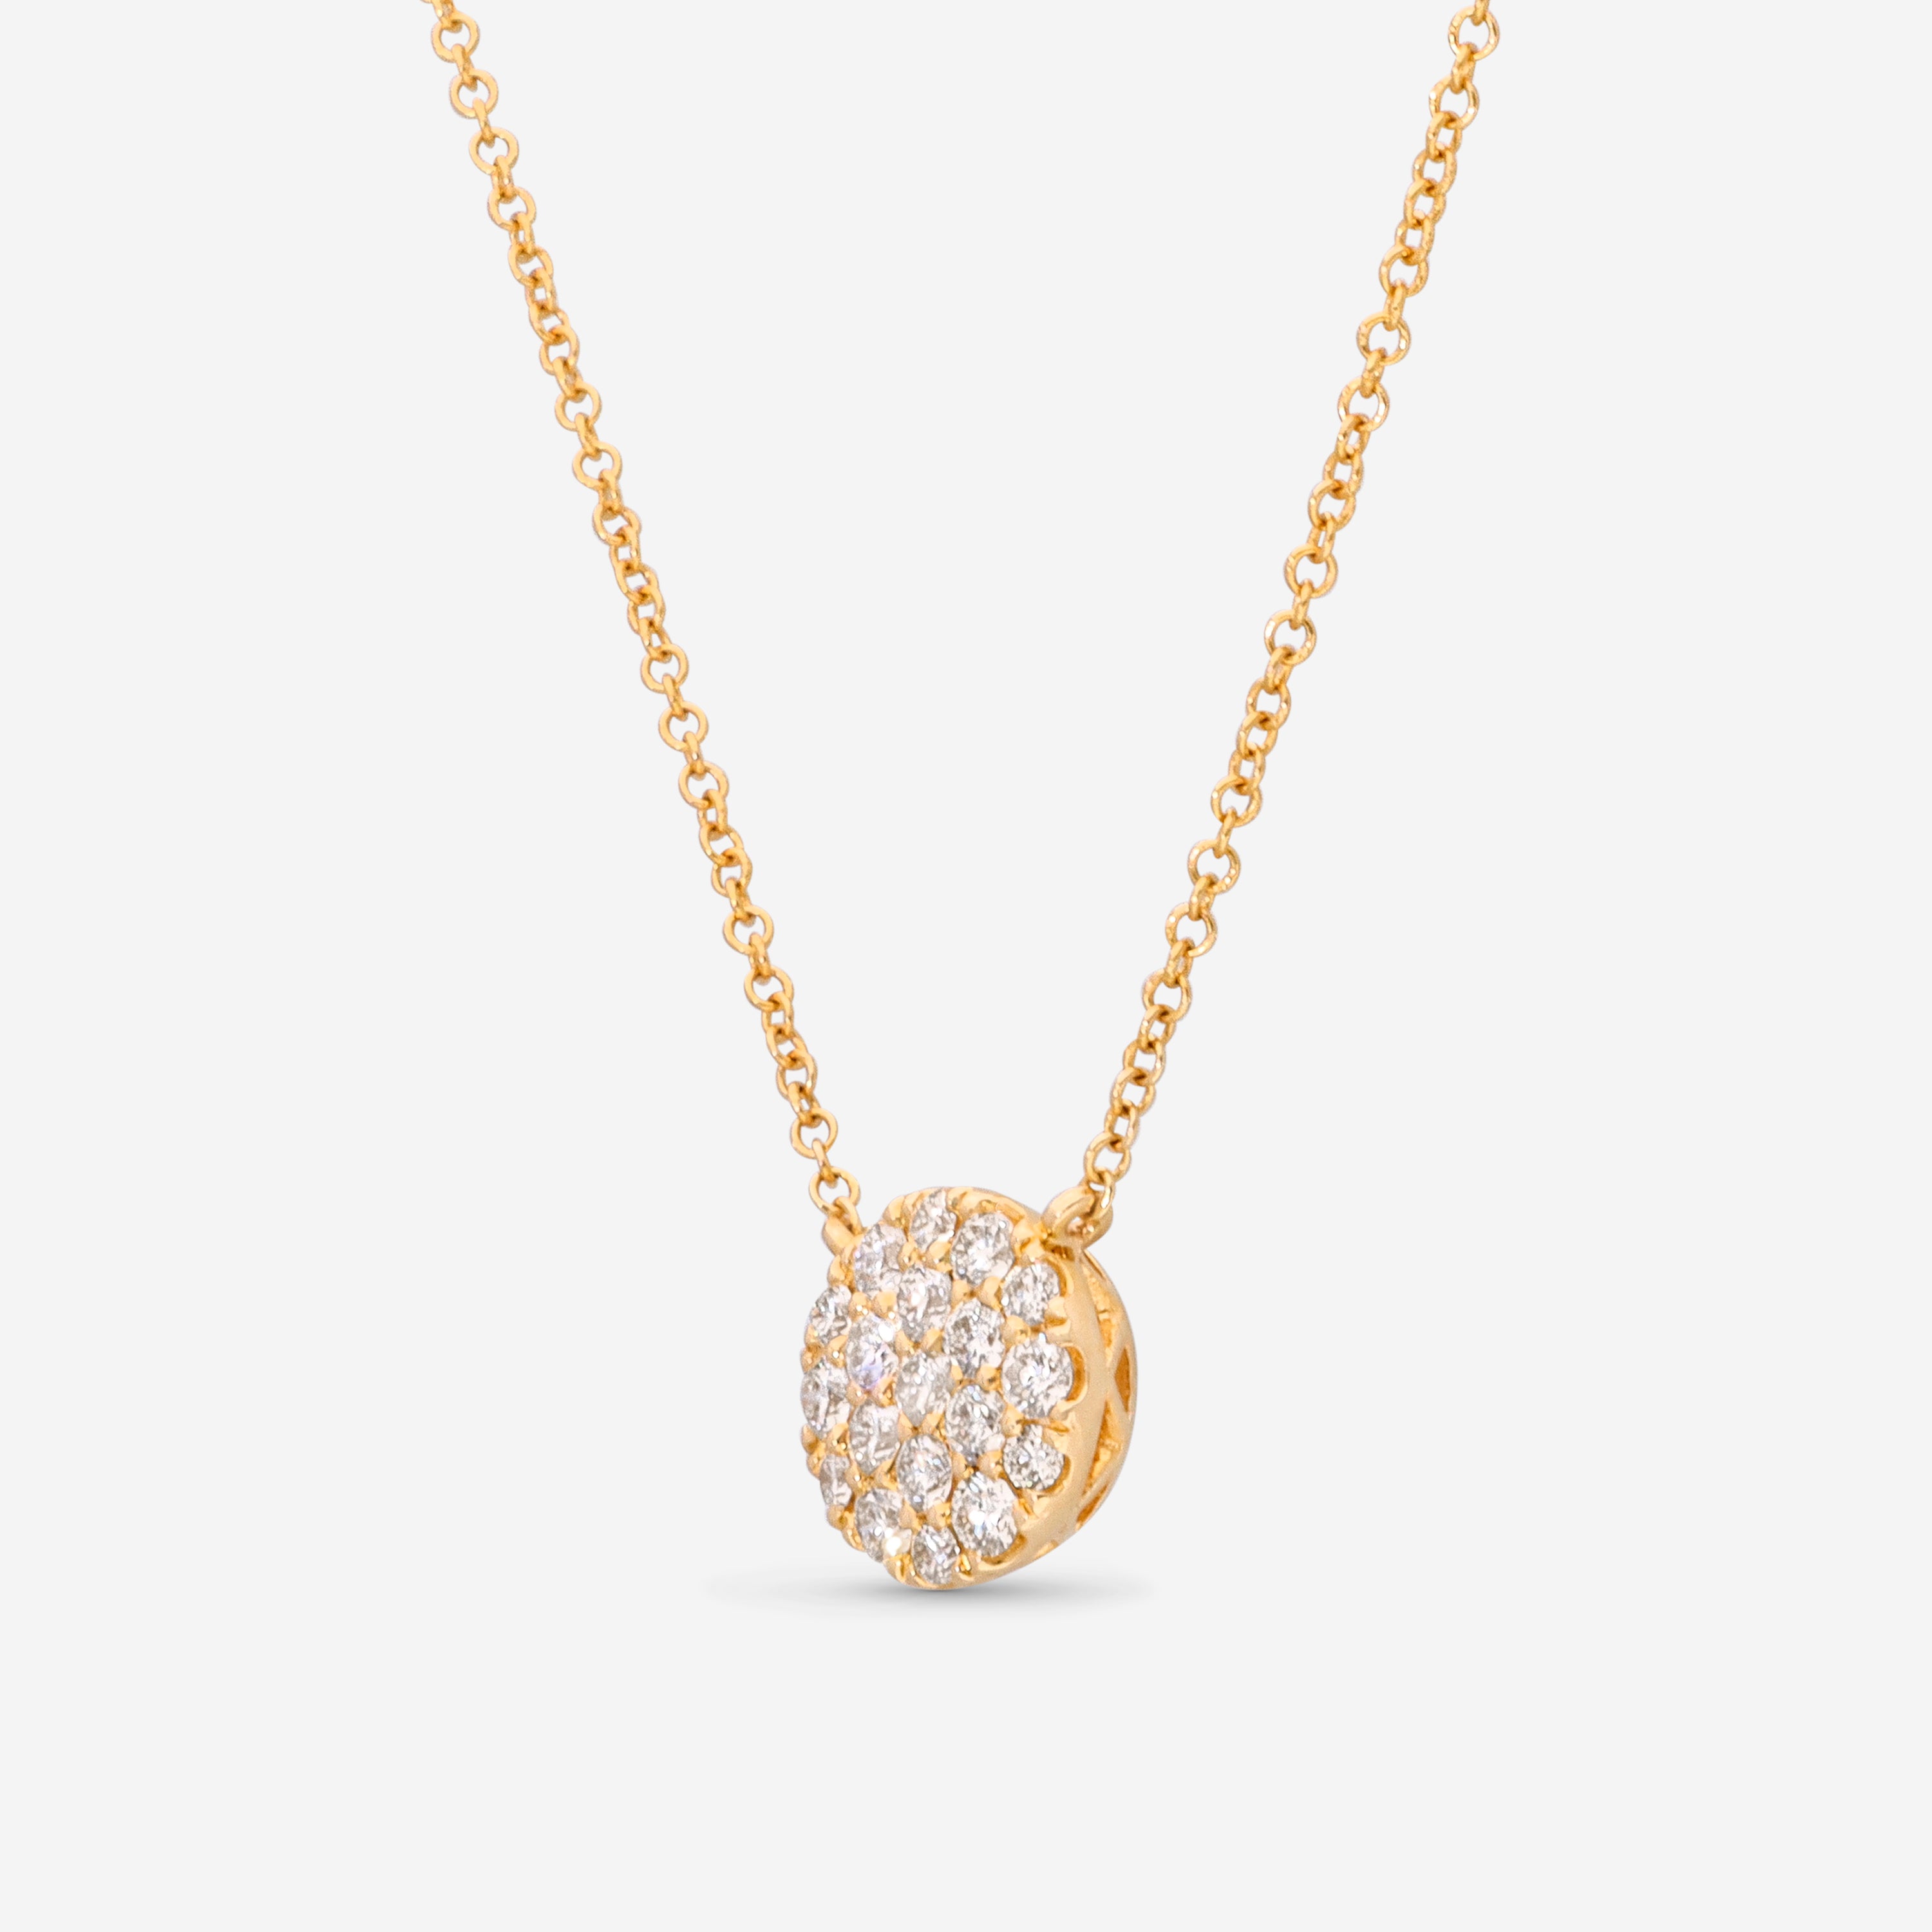 Ina Mar 14K Yellow Gold, Diamond Pendant Necklace